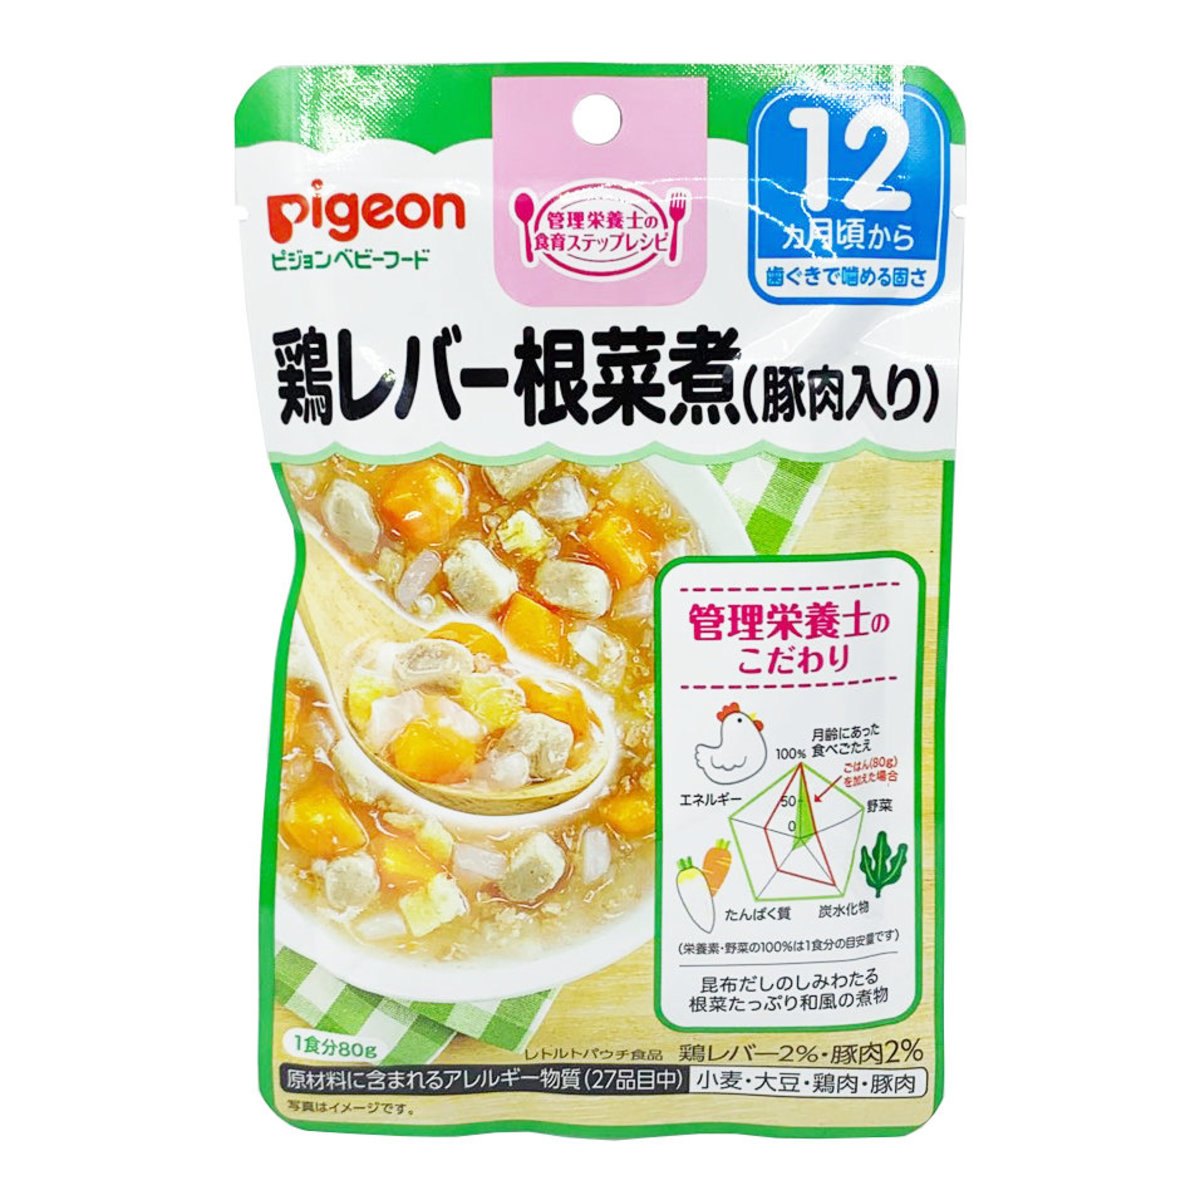 Pigeon 雞肝煮根菜(配豬肉)(1歲起)- 80g